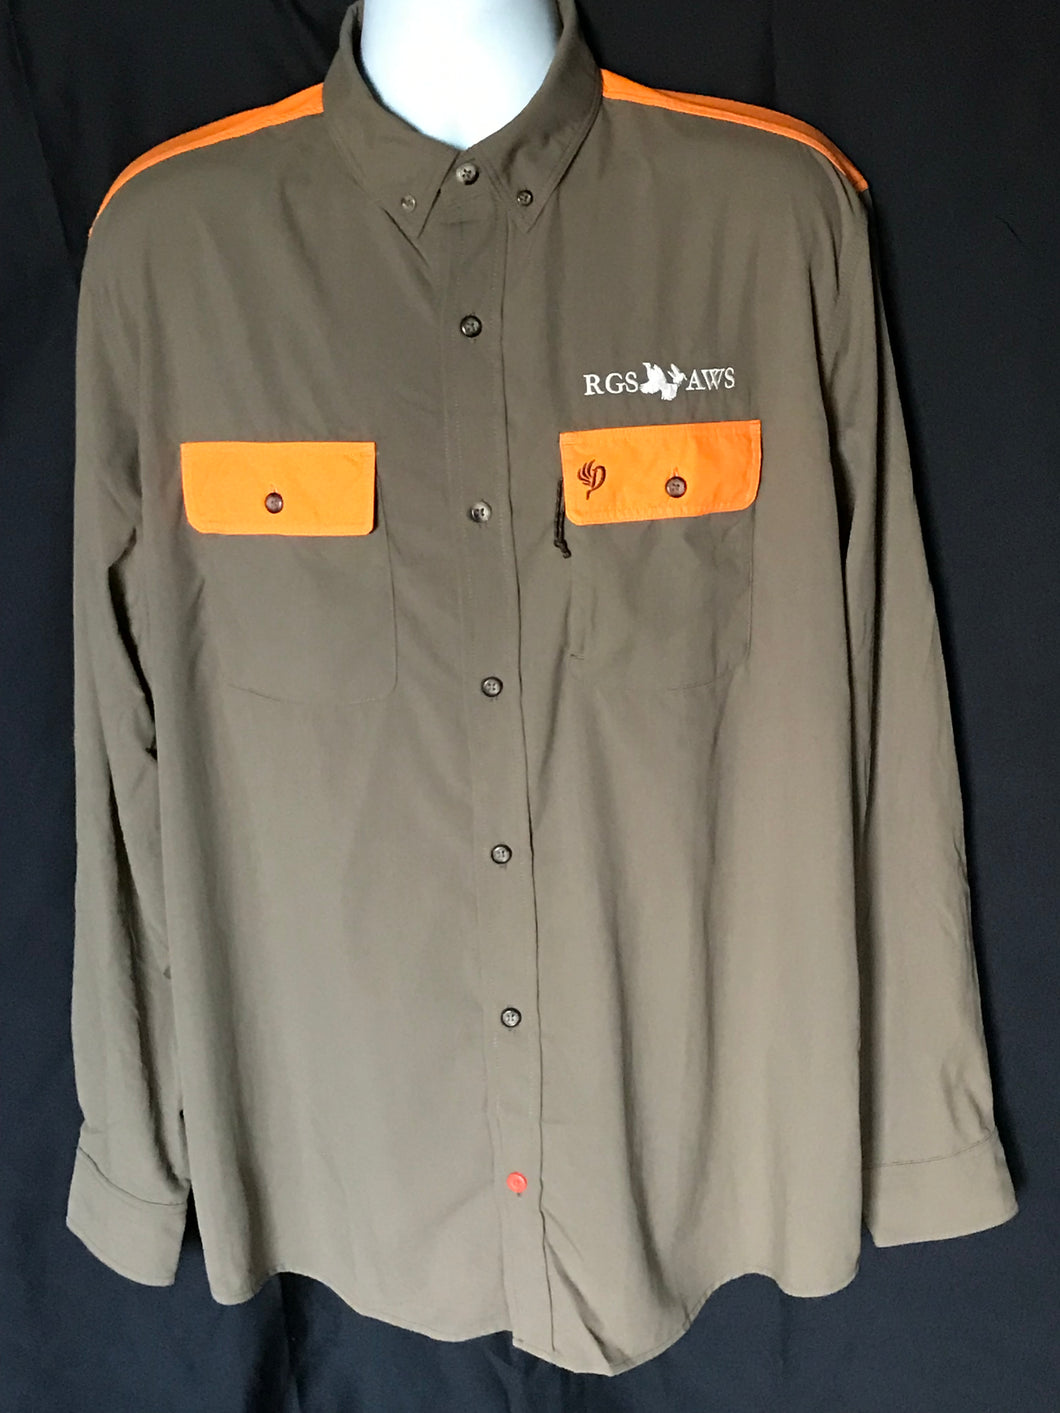 Duck Camp Lightweight Long Sleeve Hunting Shirt - Pin Oak Upland with RGS & AWS Logo